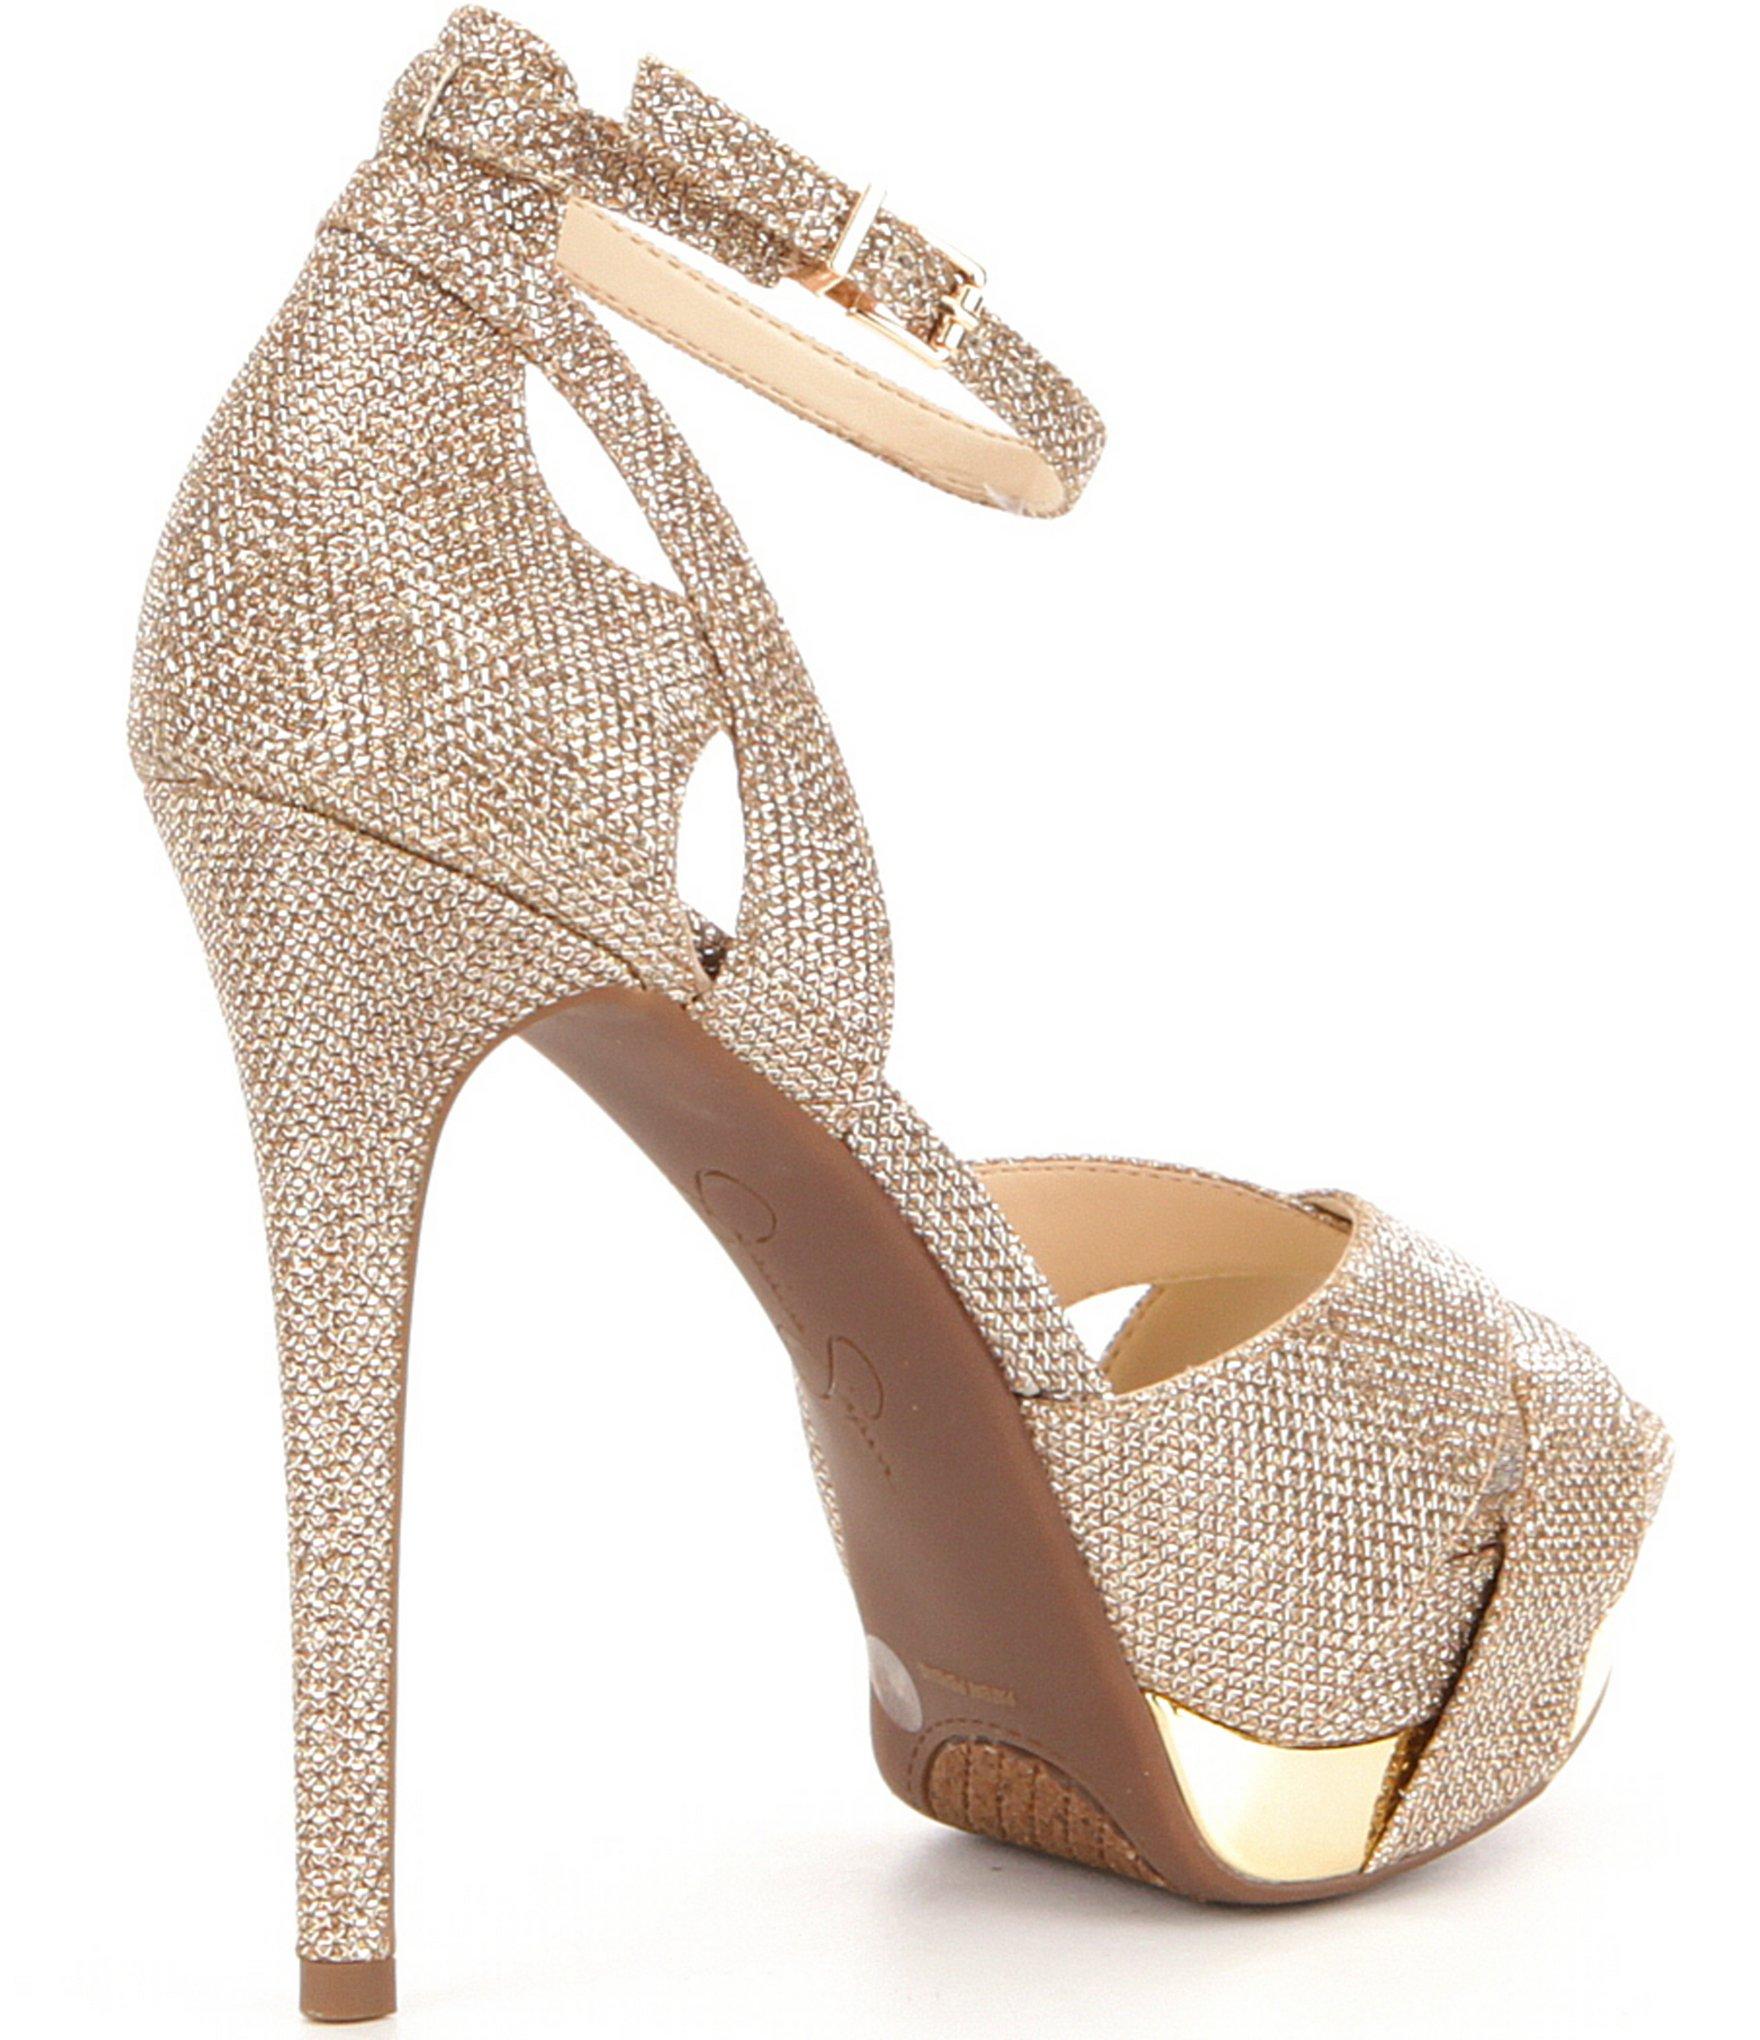 Lyst - Jessica simpson Wendah Metallic Glitter Platform Dress Sandals ...